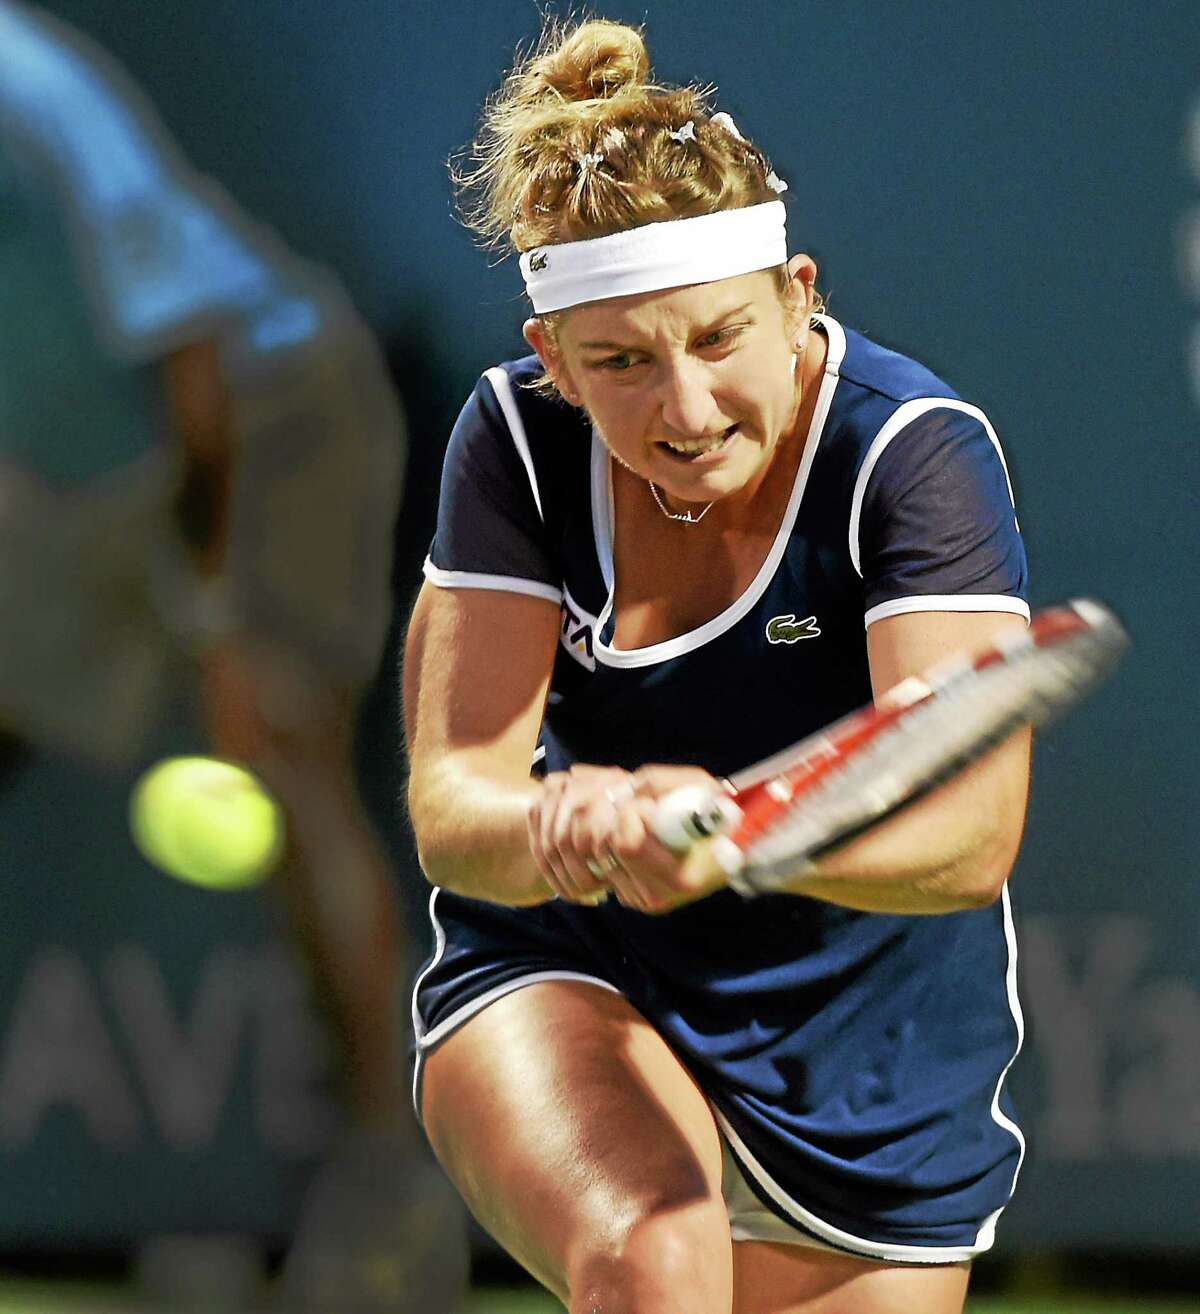 (Melanie Stengel - Register) Connecticut Open Tennis Wozniacki vs. Bacsinszky. Timea Bacsinszky in the first set 8/18.